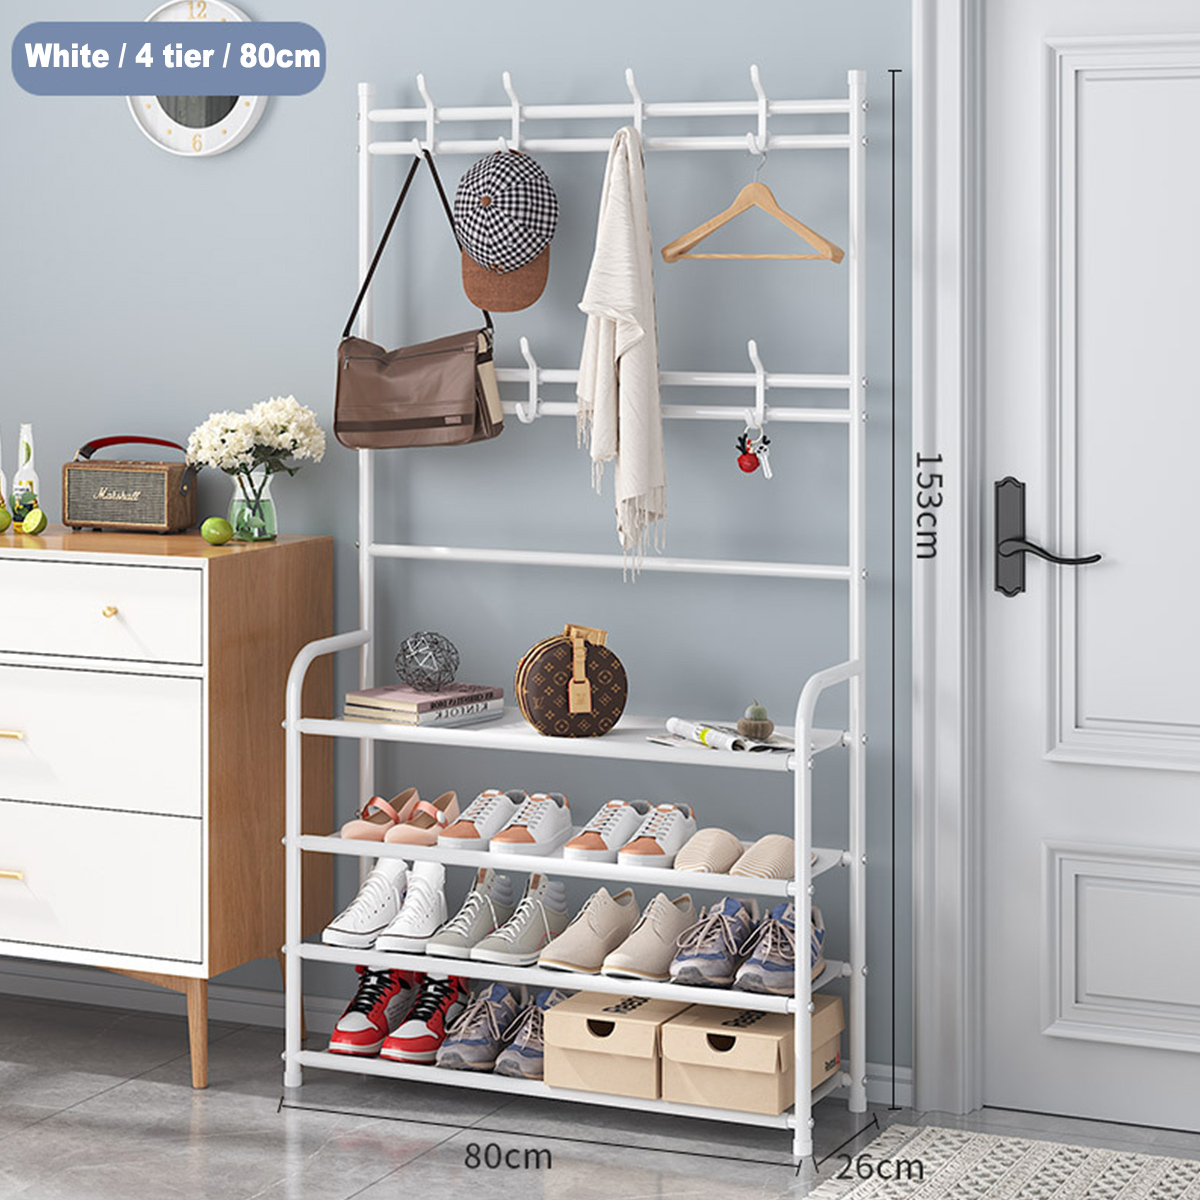 Clothes-Storage-Rack-Floor-Clothes-Rack-Shoes-Rack-Combination-For-Entryway-Livingroom-Restroom-Deco-1841513-9